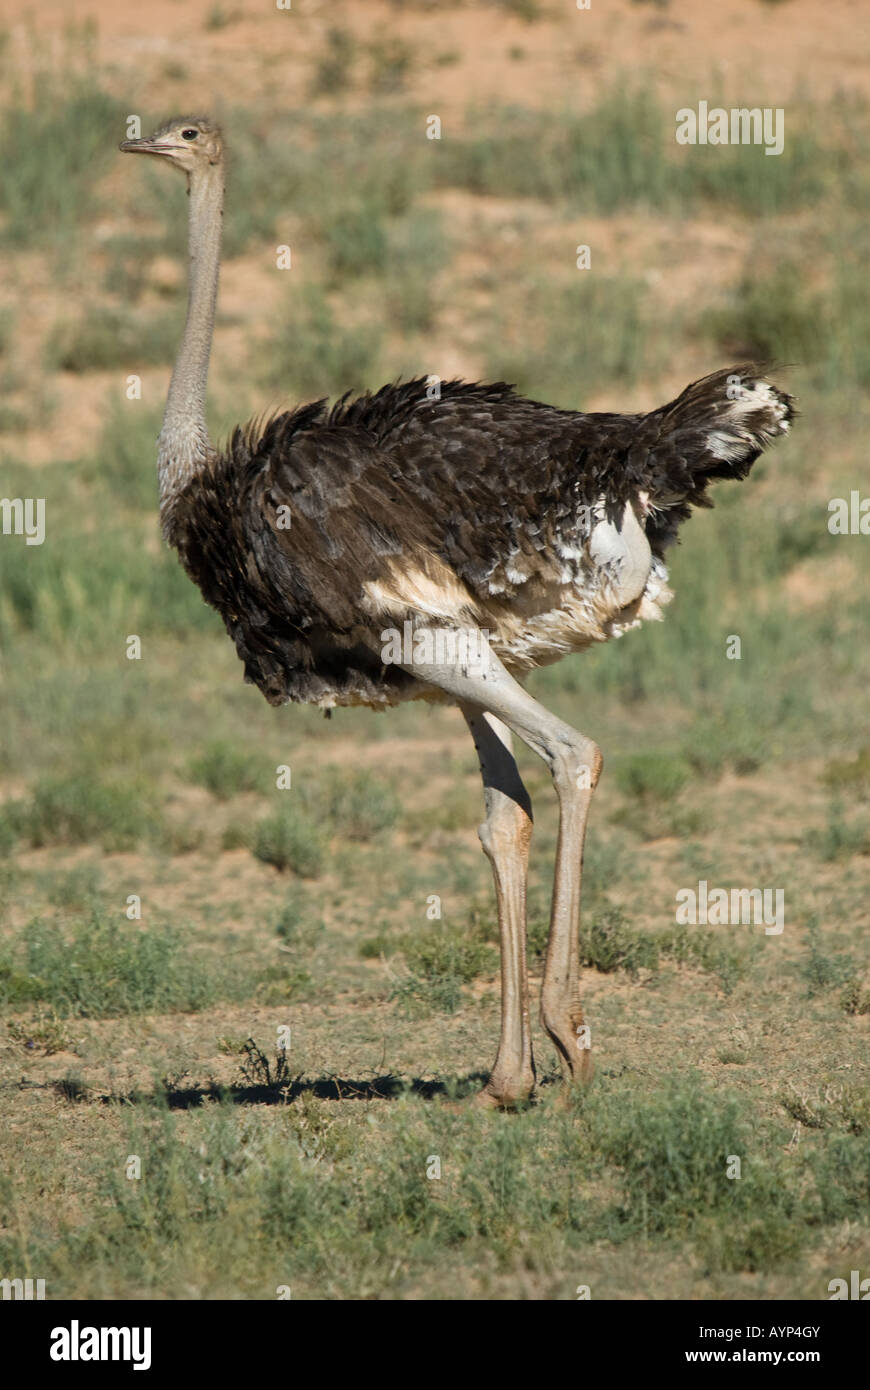 A male ostrich standing in the Kalahari semi-desert Stock Photo